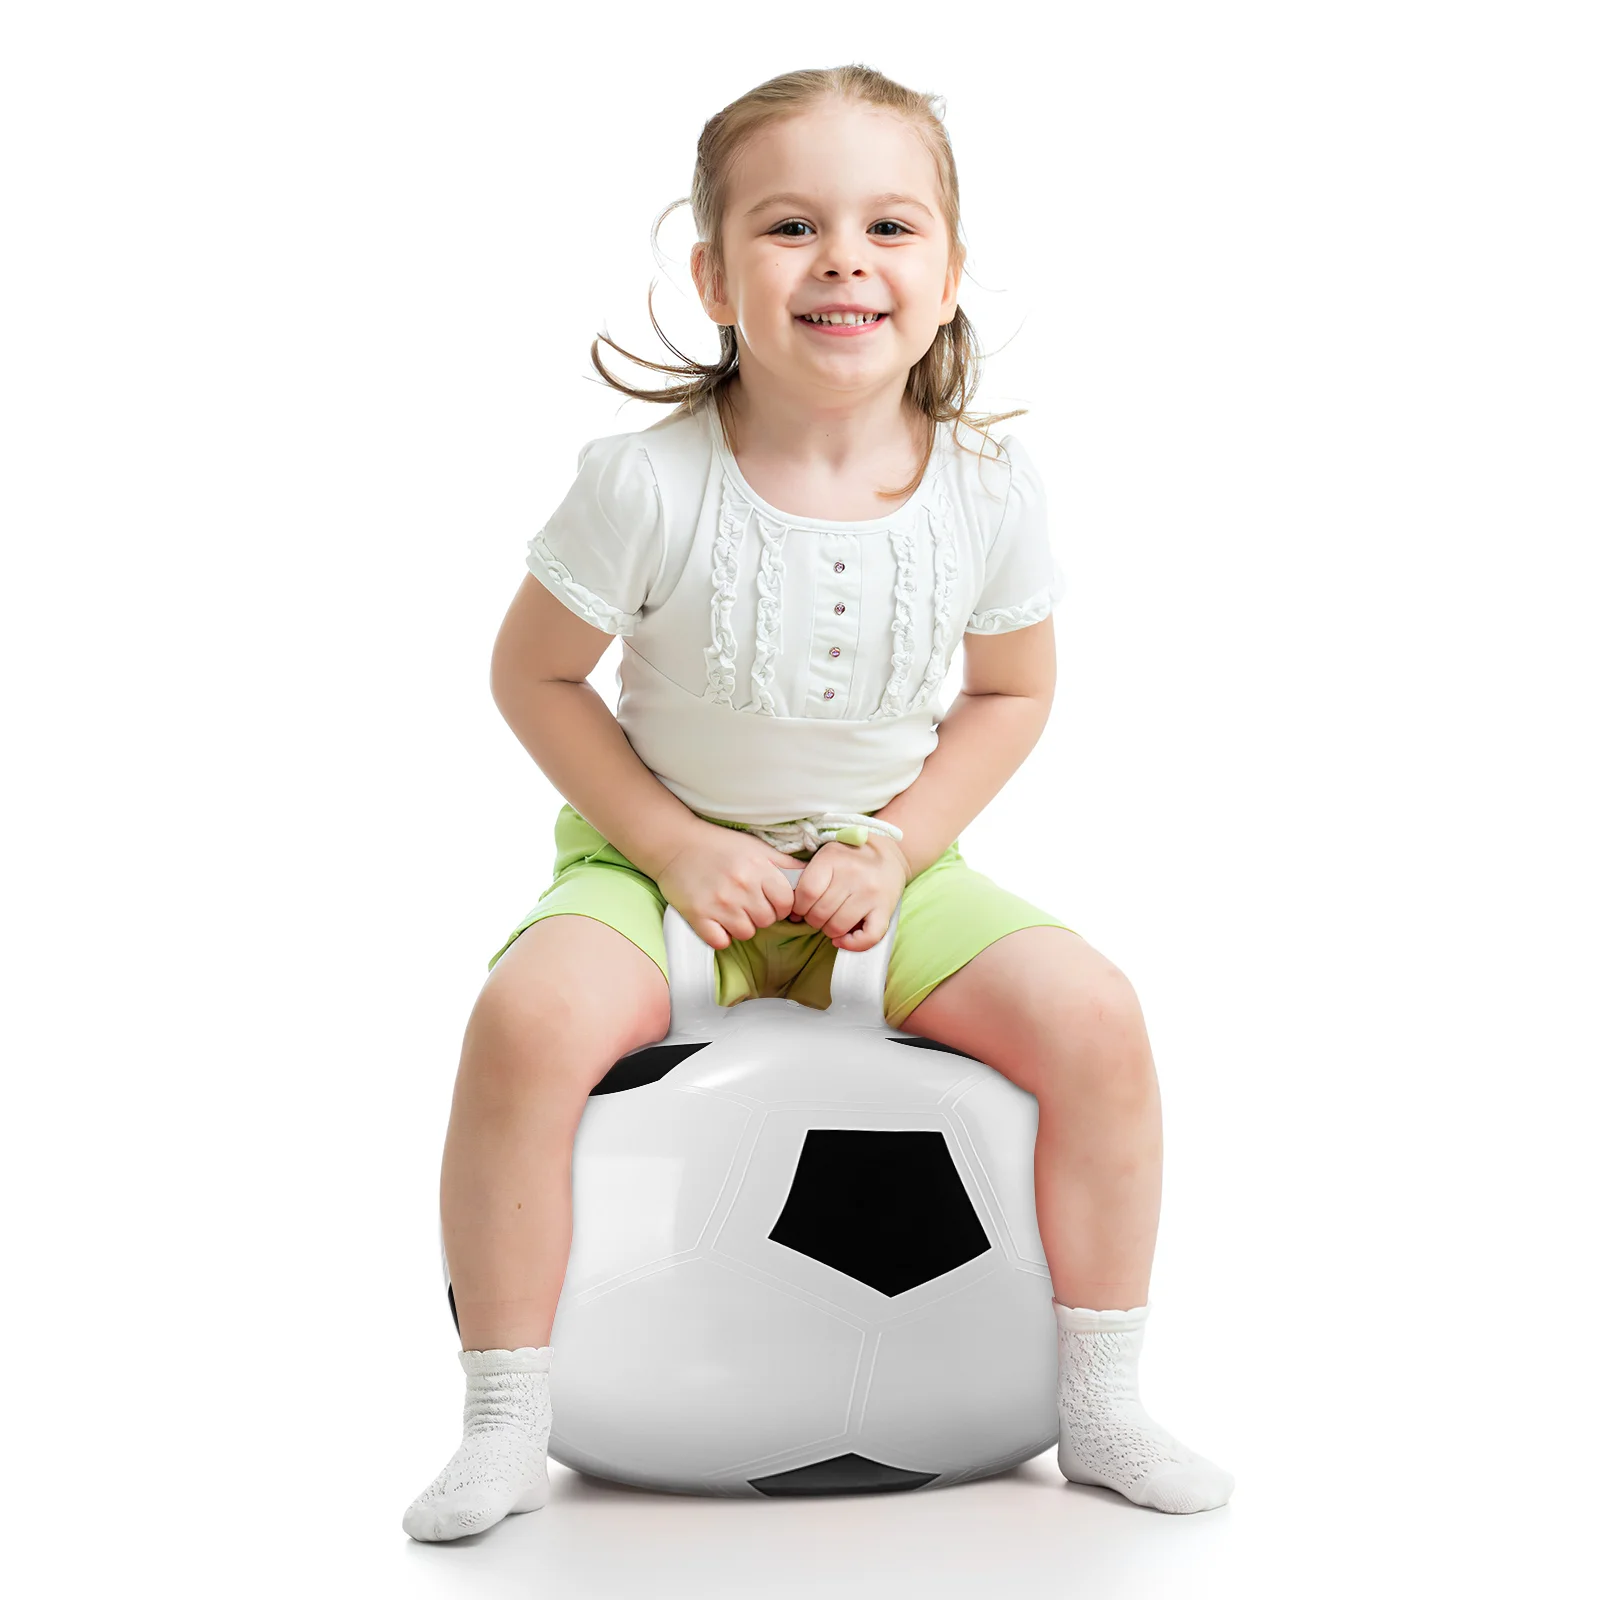 

STOBOK 45cm PVC Inflatable Hopper Ball Hopping Ball Jumping Ball Bouncing Ball with Handle for Kids